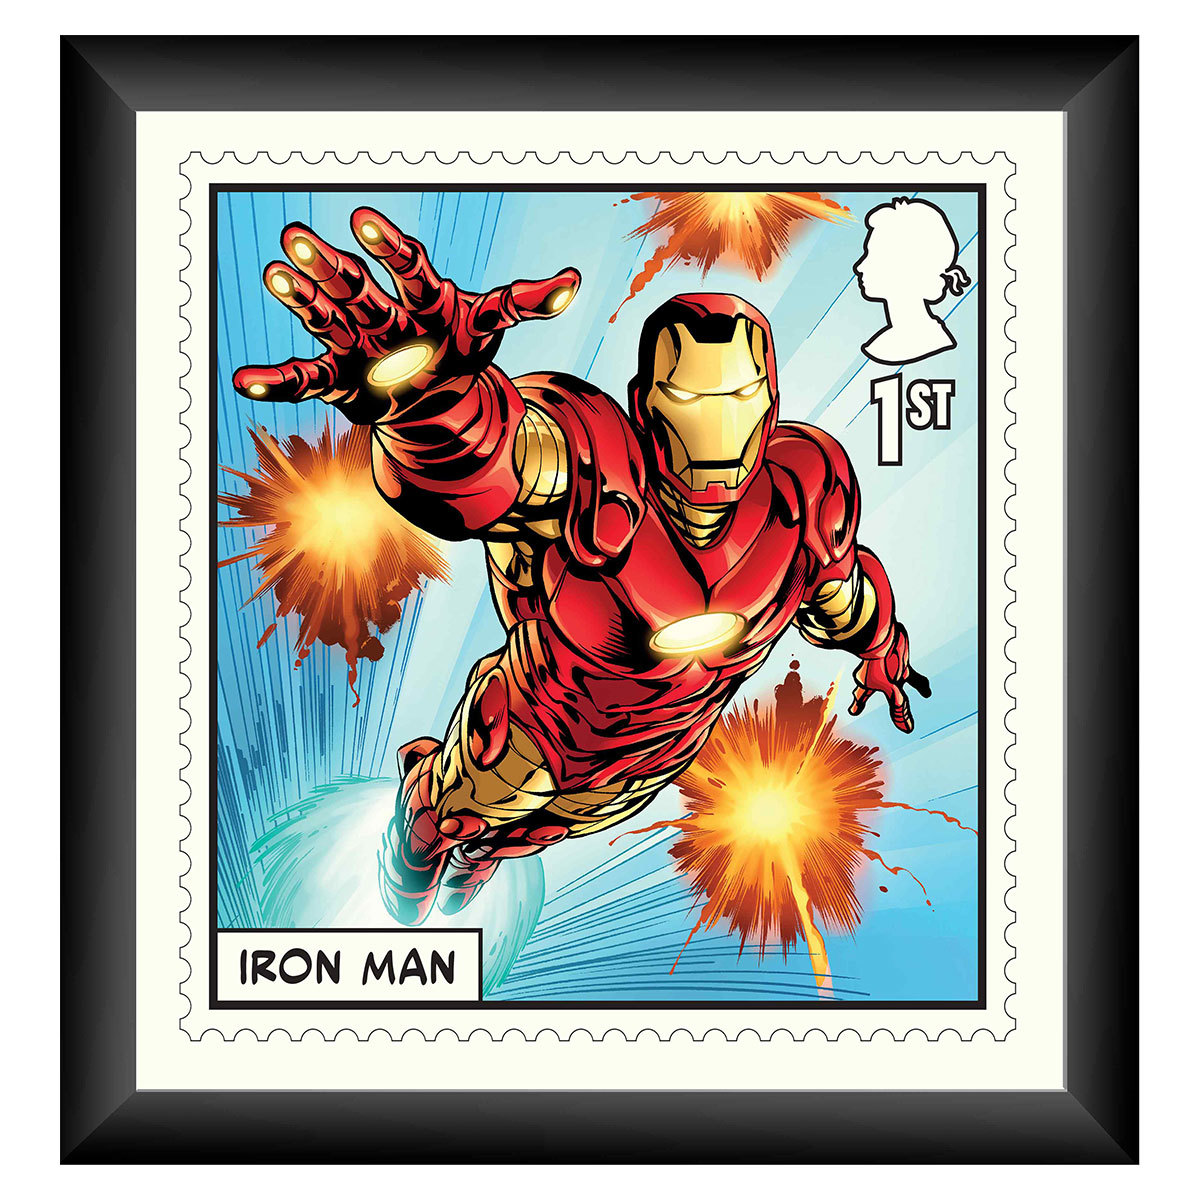 Iron Man framed Stamp